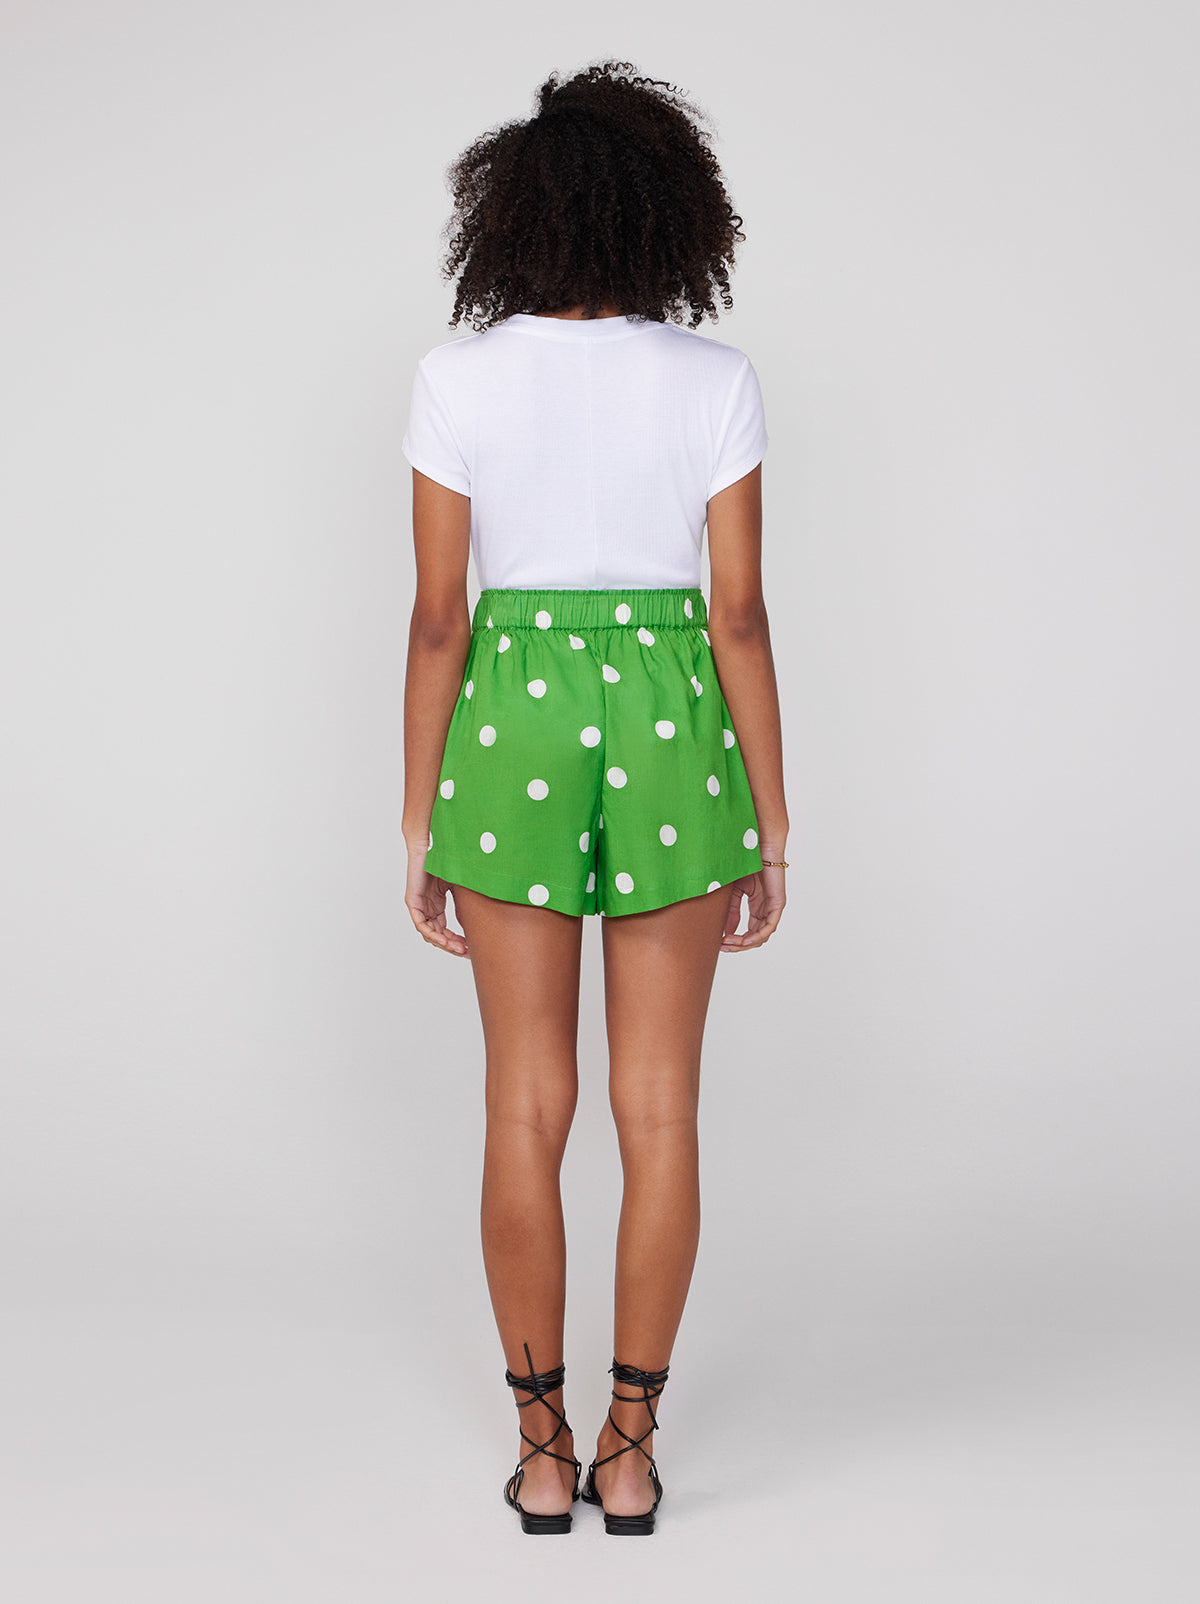 Lena Green Polka Dot Shorts By KITRI Studio